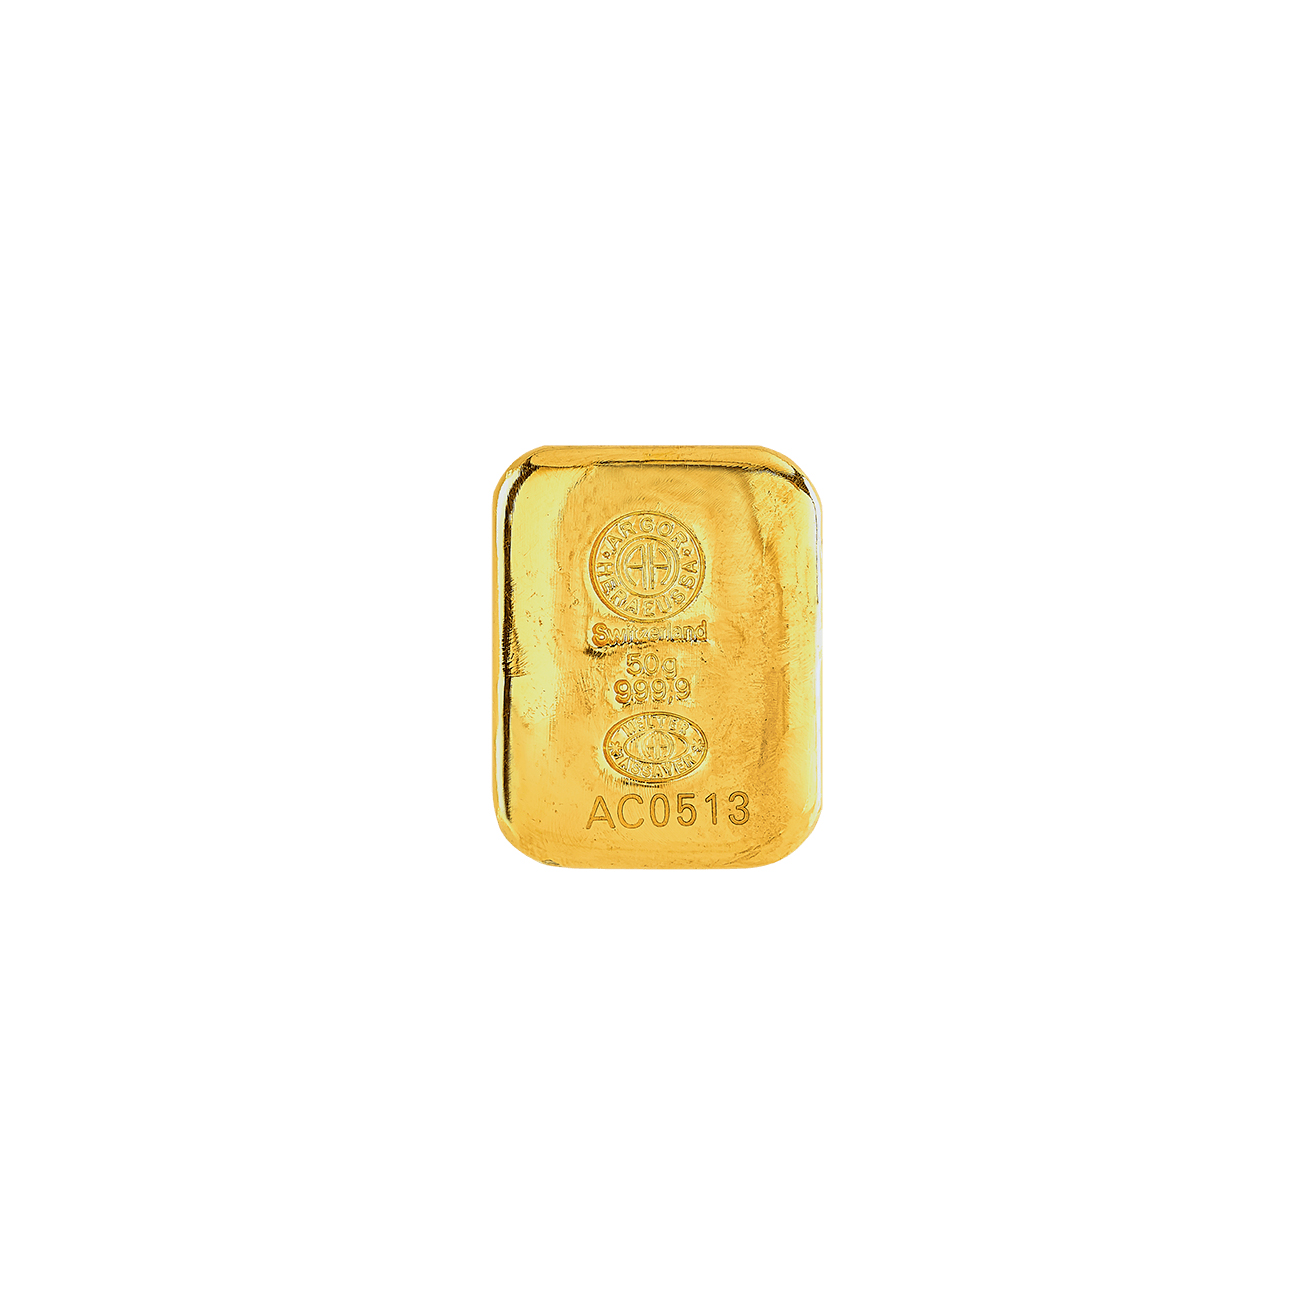 [50Gram] Argor-Heraeus Au Cast Retail Gold Bar